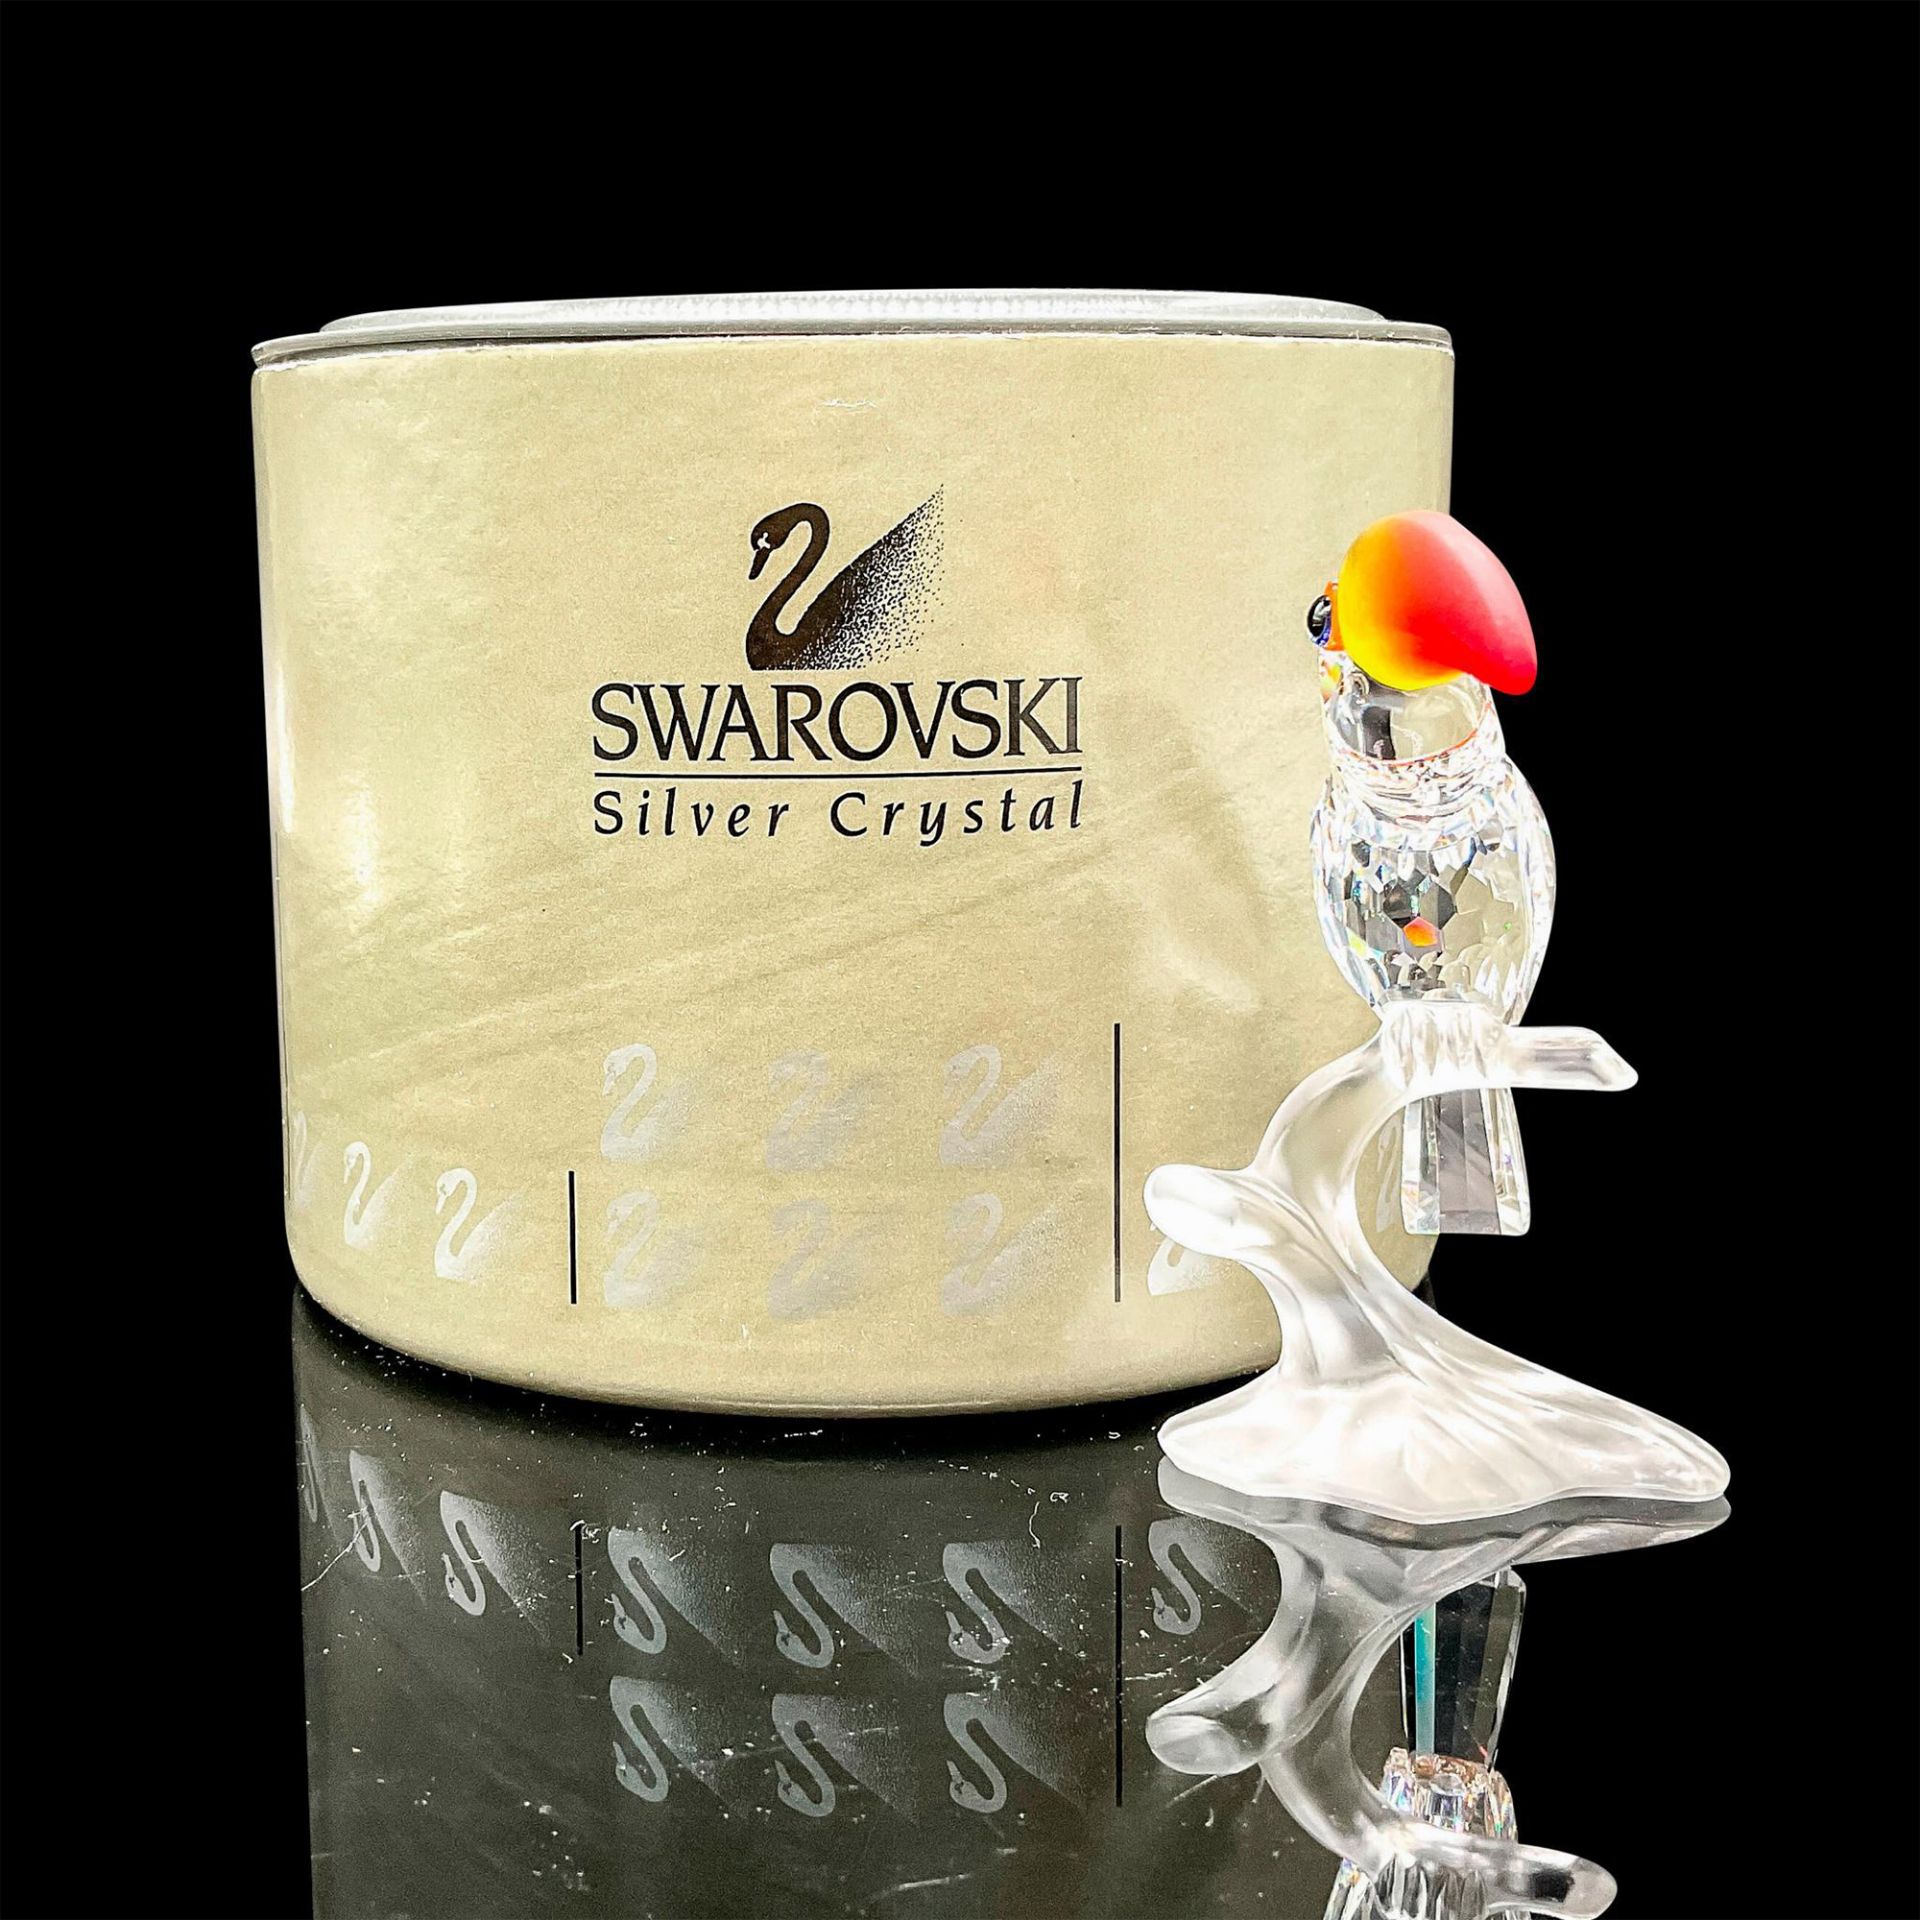 Toucan with Color Beak - Swarovski Silver Crystal Figurine - Image 2 of 4